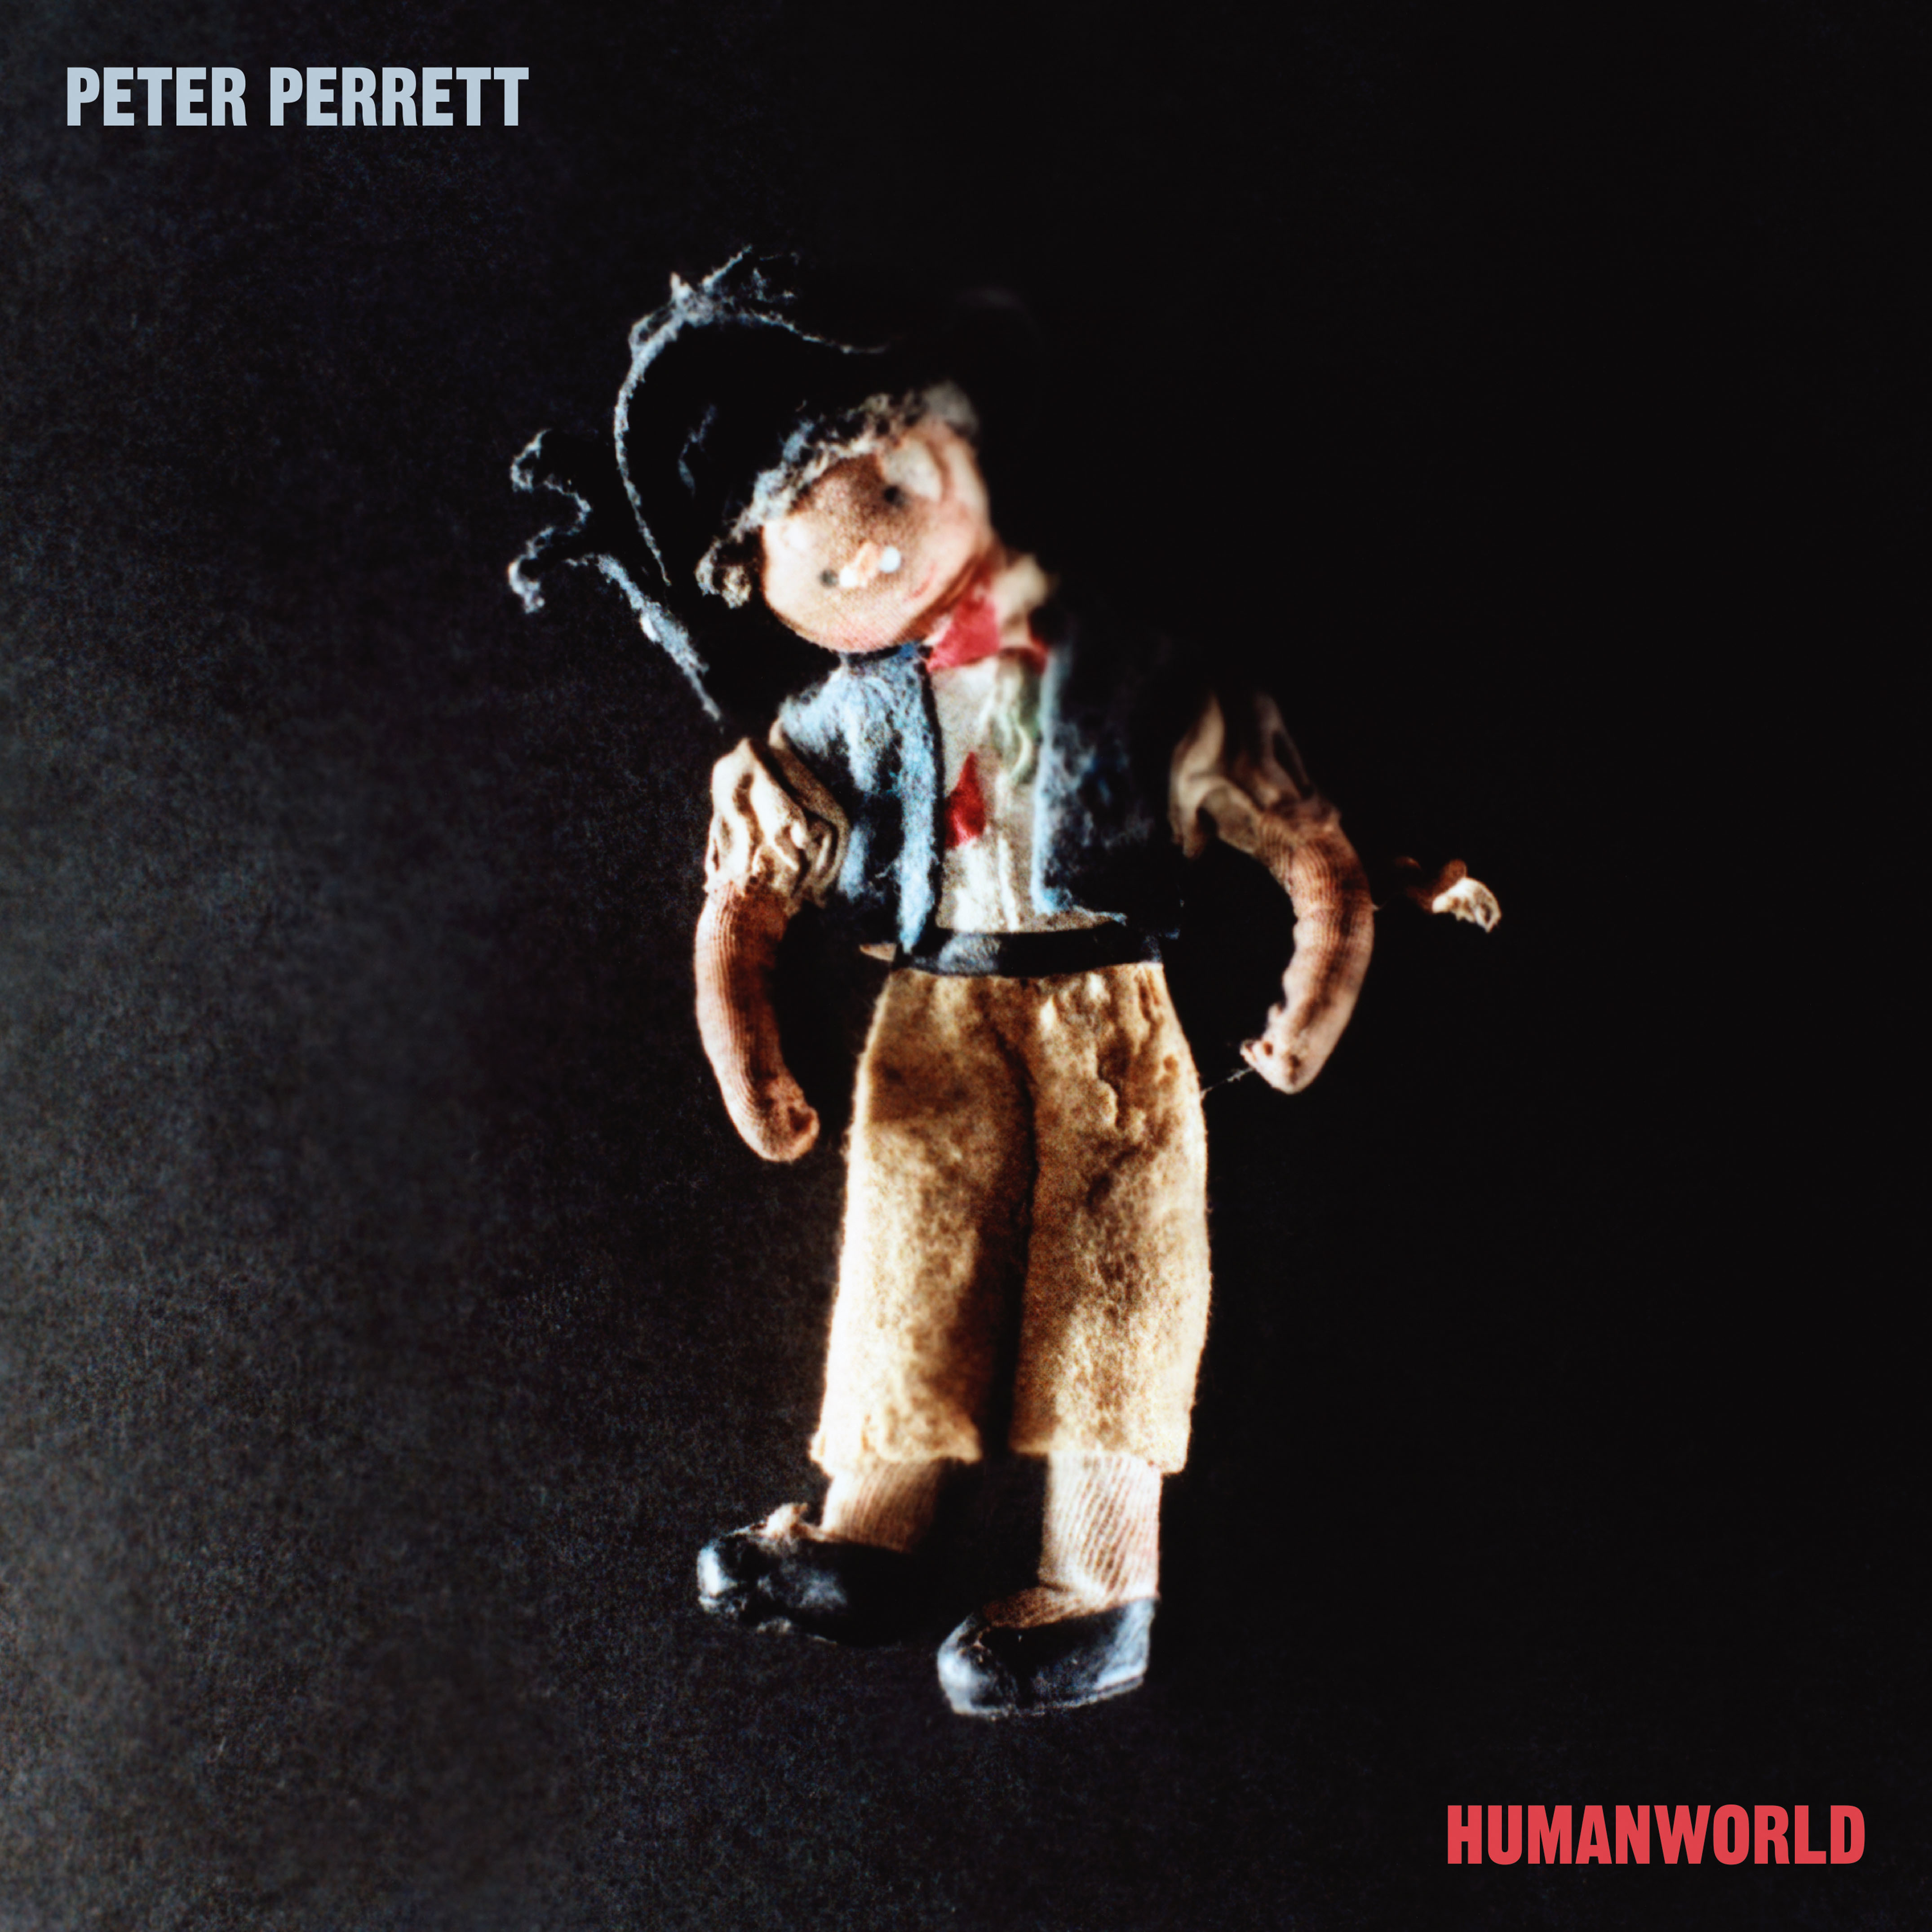 PETER PERRETT – HUMANWORLD (LP/CD)